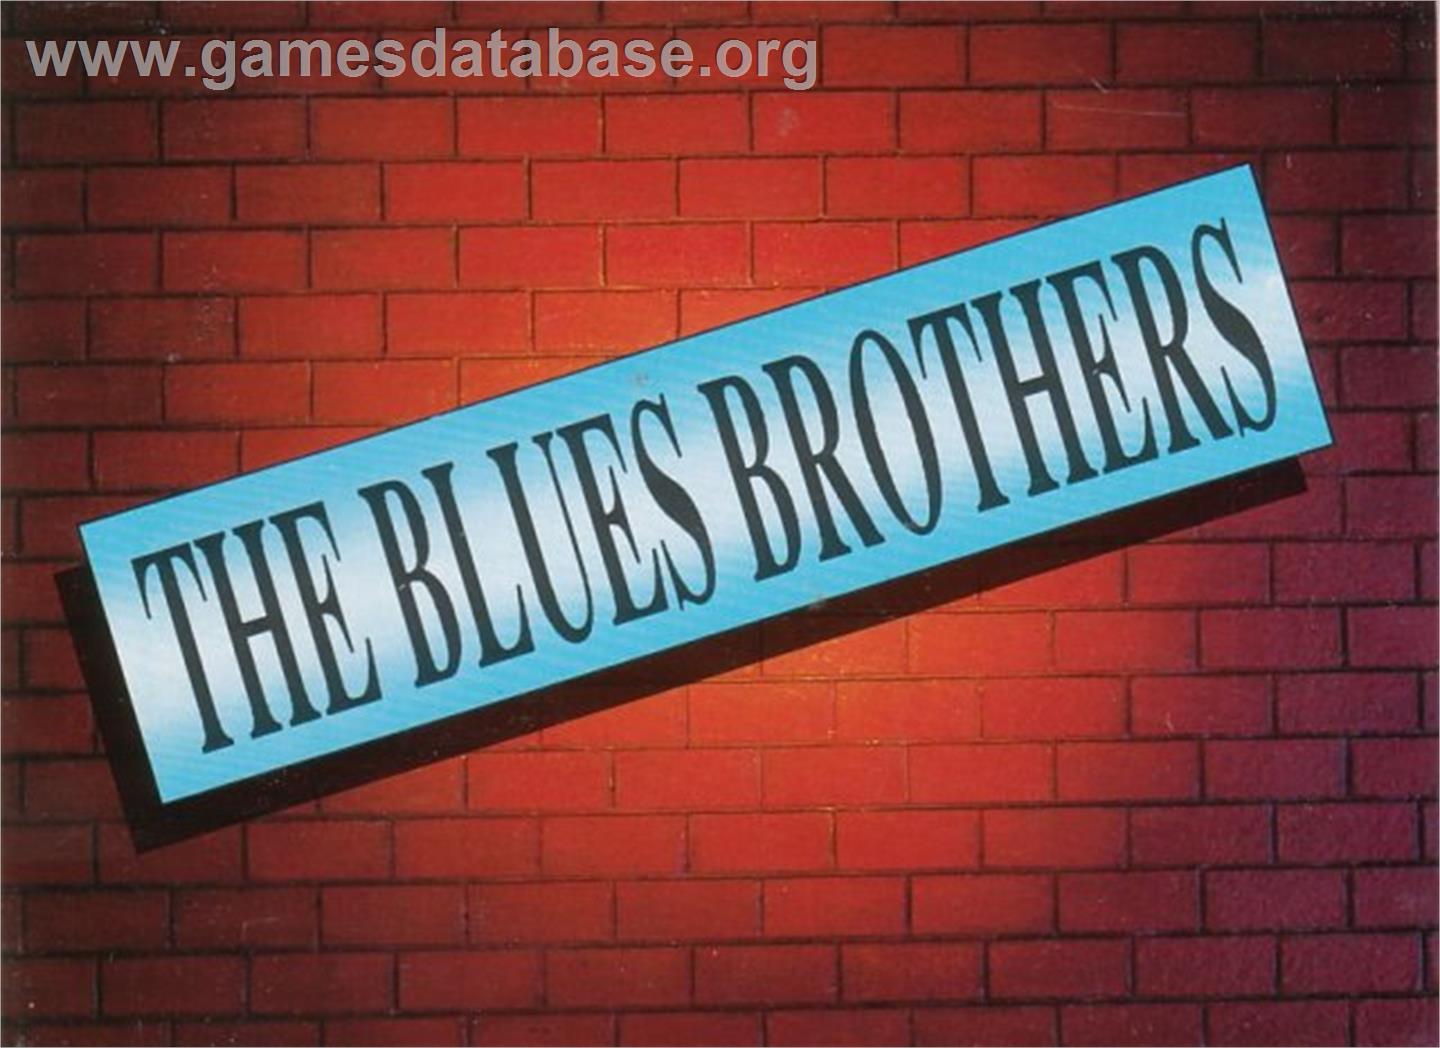 Blues Brothers - Commodore Amiga - Artwork - Advert